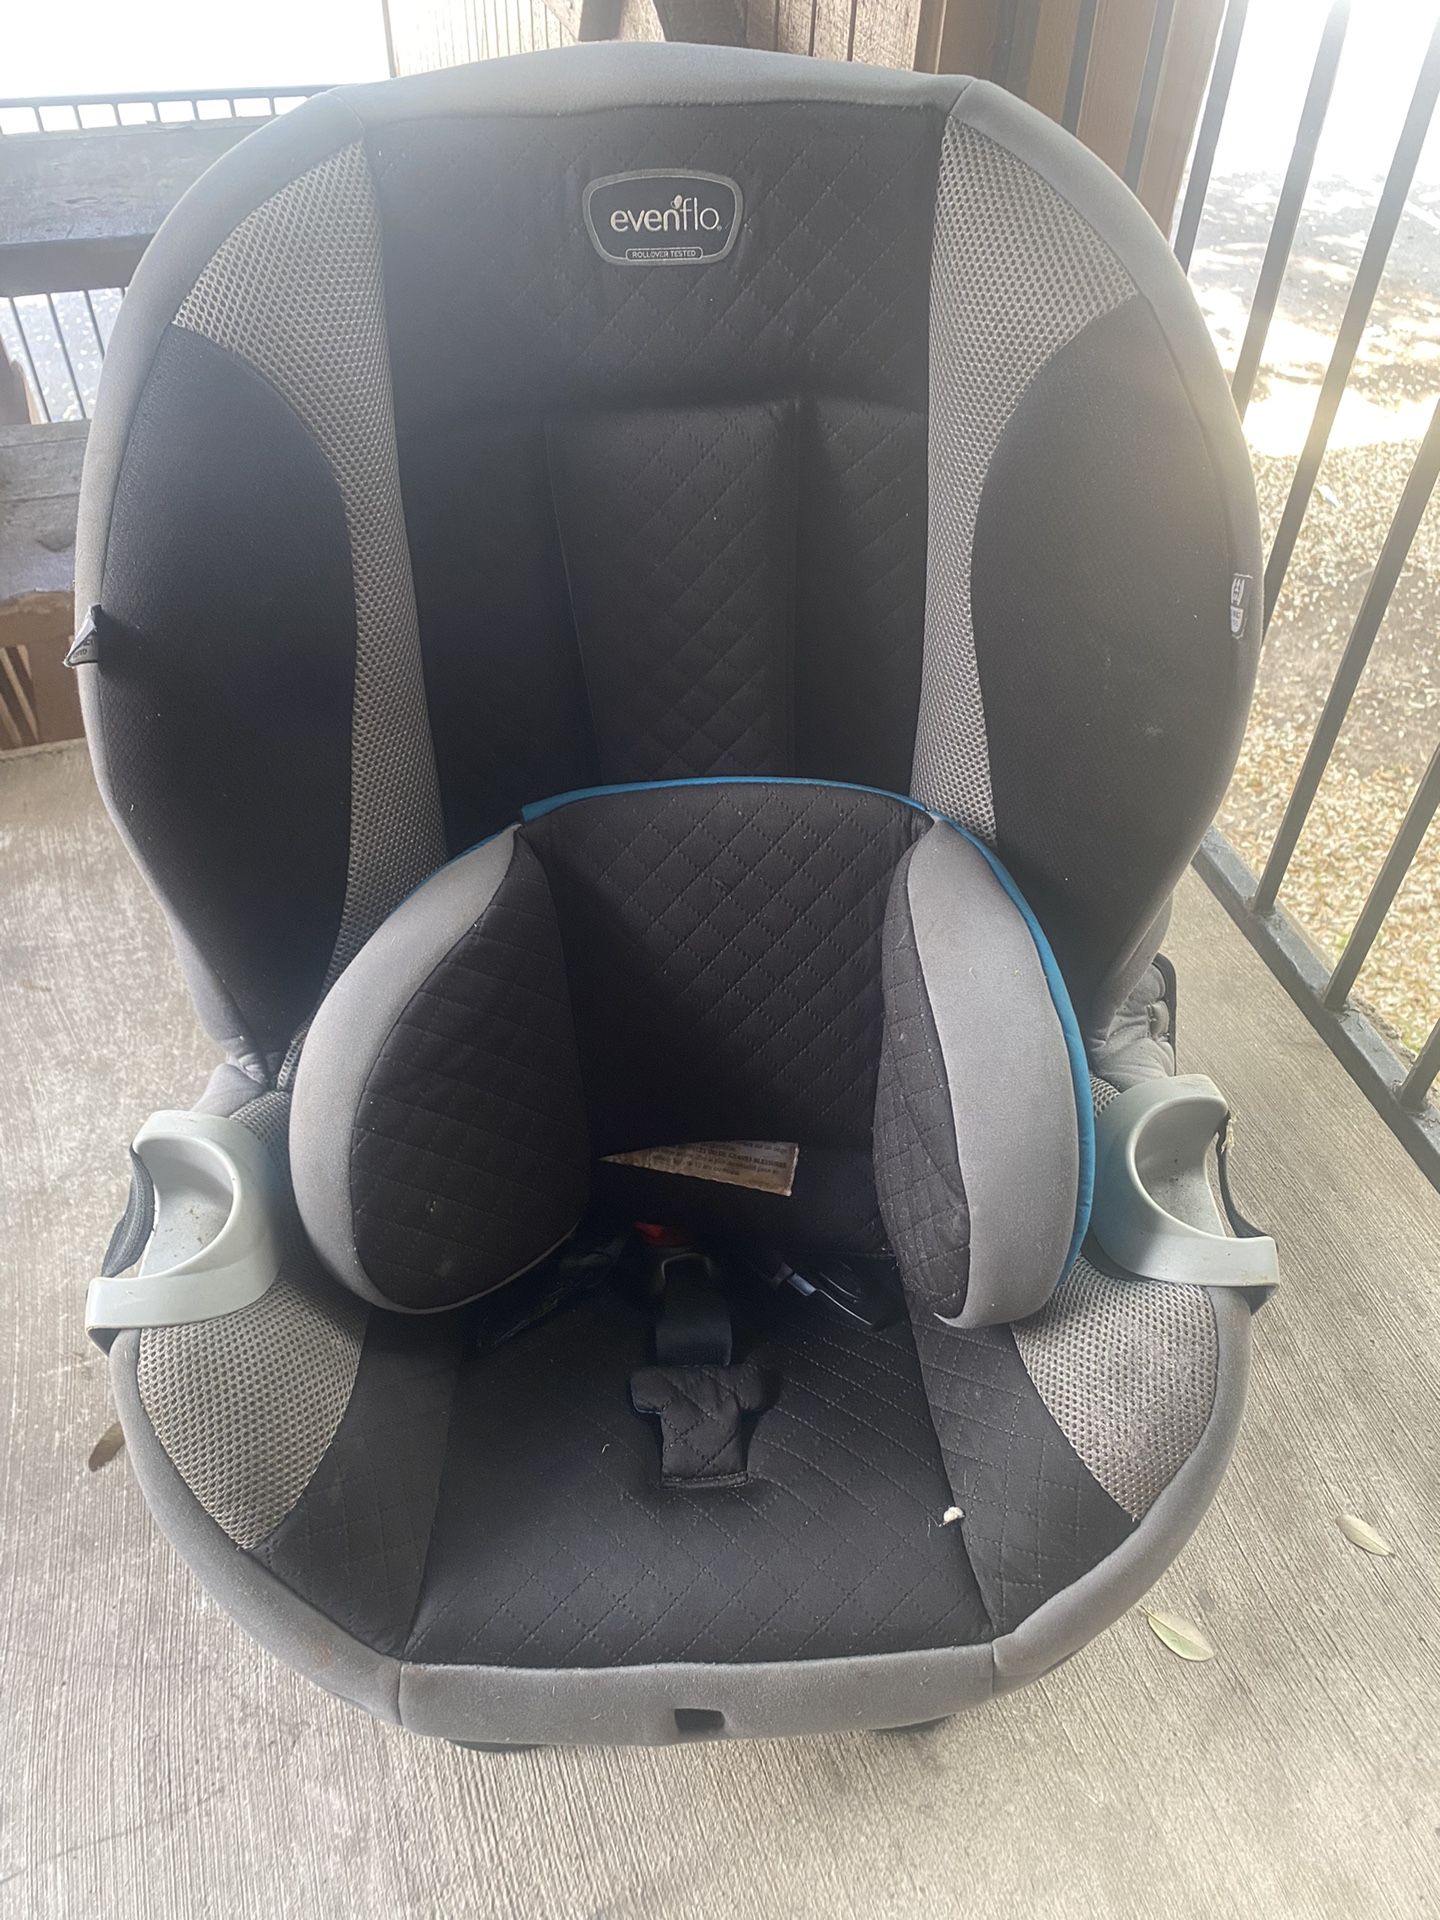 Infant Car seat